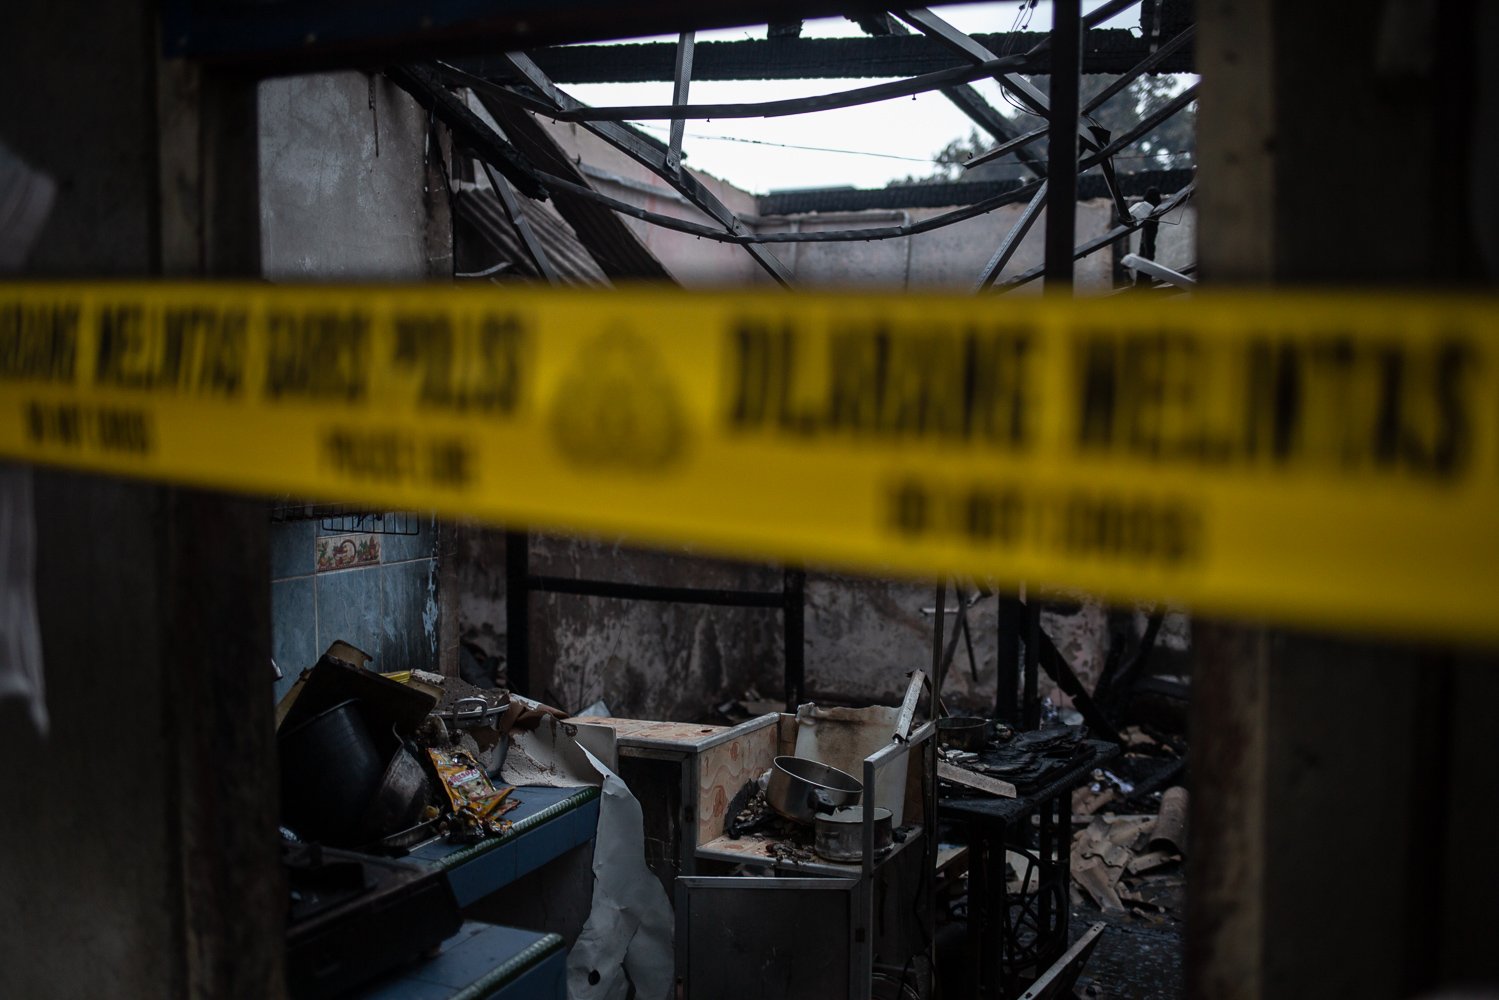 Reruntuhan bagunan rumah semi permanen yang hangus dilahap si jago merah diberi garis polisi di Jalan Simprug Golf II, Kecamatan Kebayoran Lama, Jakarta, Minggu (21/8). Akibat peristiwa tersebut 1 orang meninggal dunia diduga akibat kaget dan kelelahan. Selain itu, sebanyak 383 jiwa dari 164 KK harus mengungsi di tenda darurat.